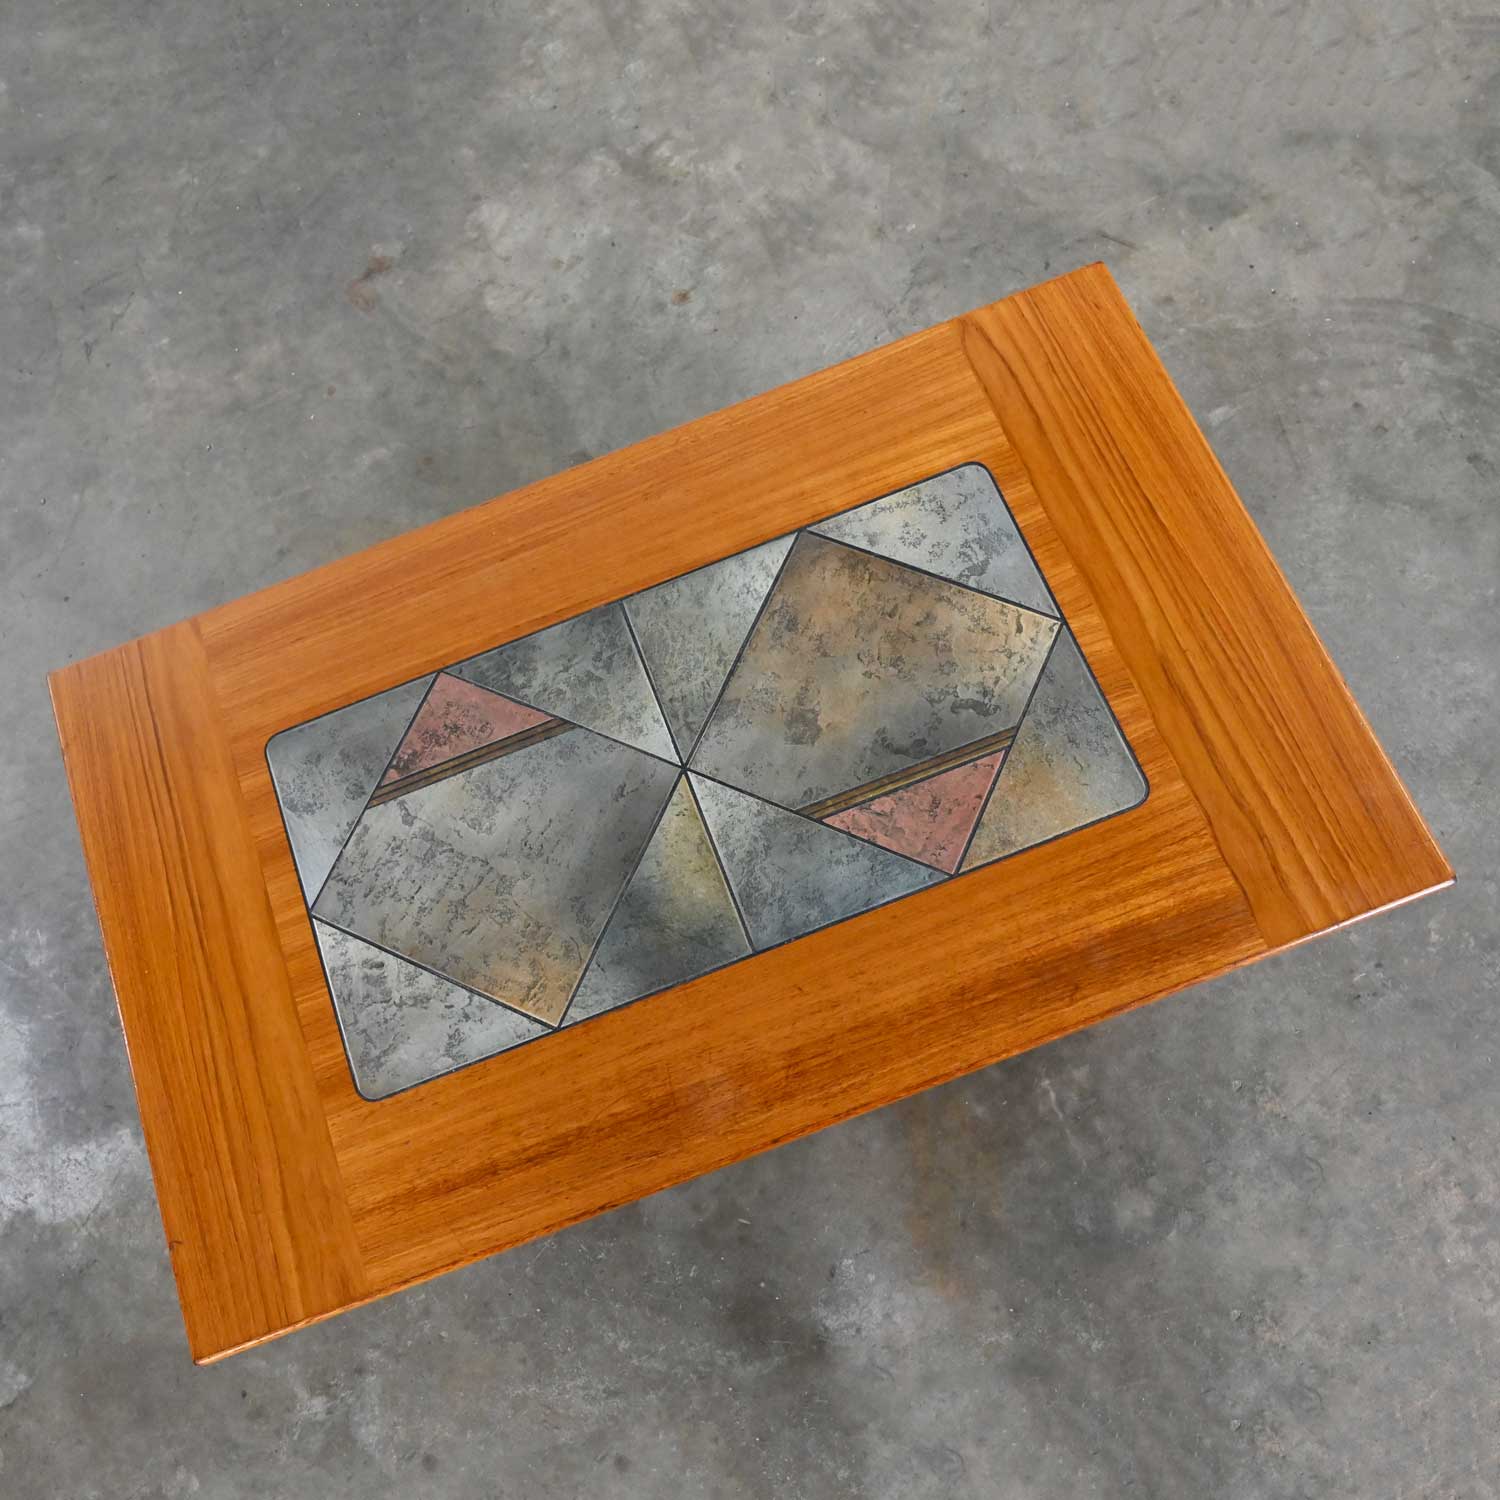 Scandinavian Modern Teak Coffee Table with Tile Insert by Poul H. Poulsen for Gangso Mobler